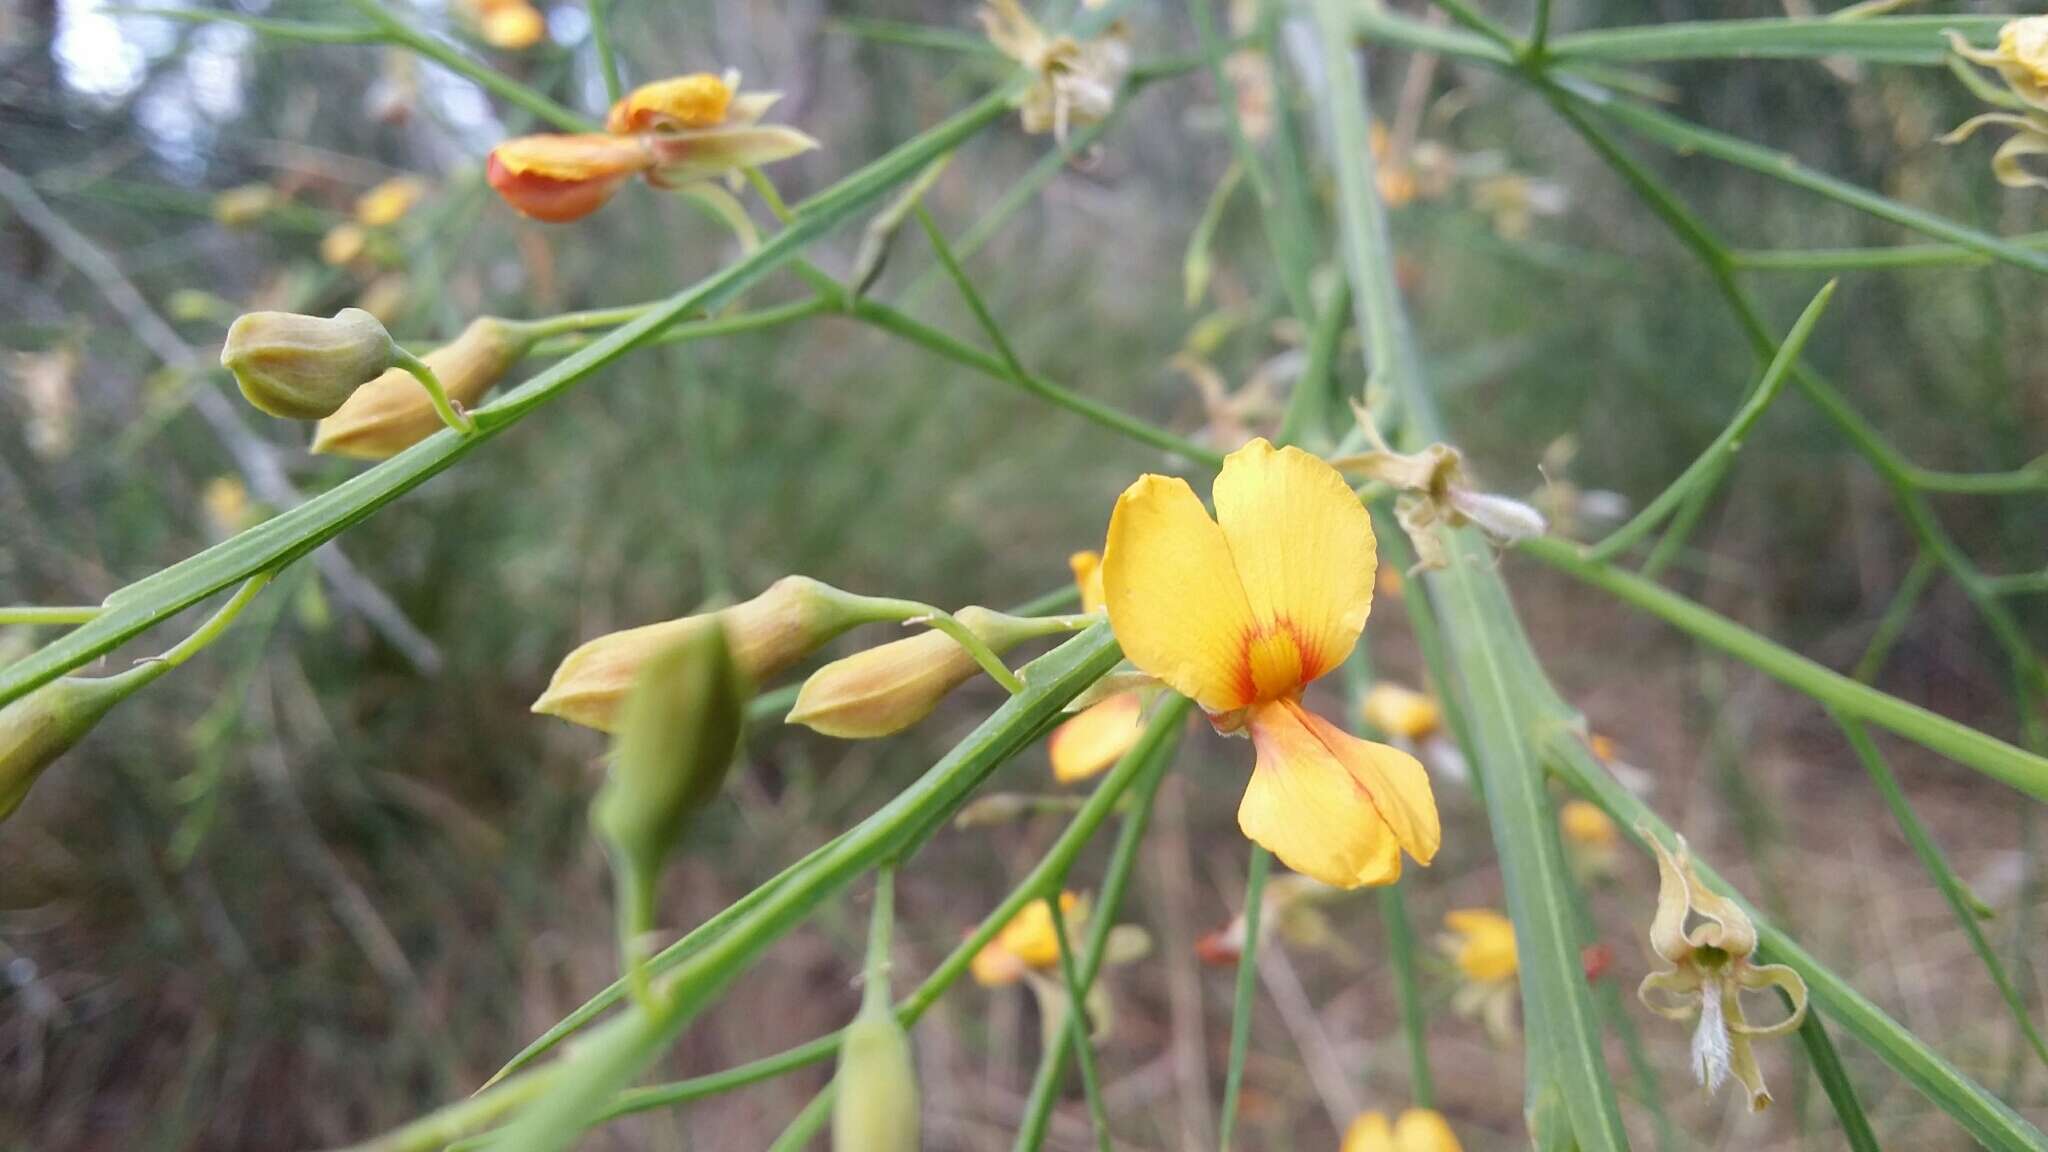 Image of Jacksonia sternbergiana Benth.